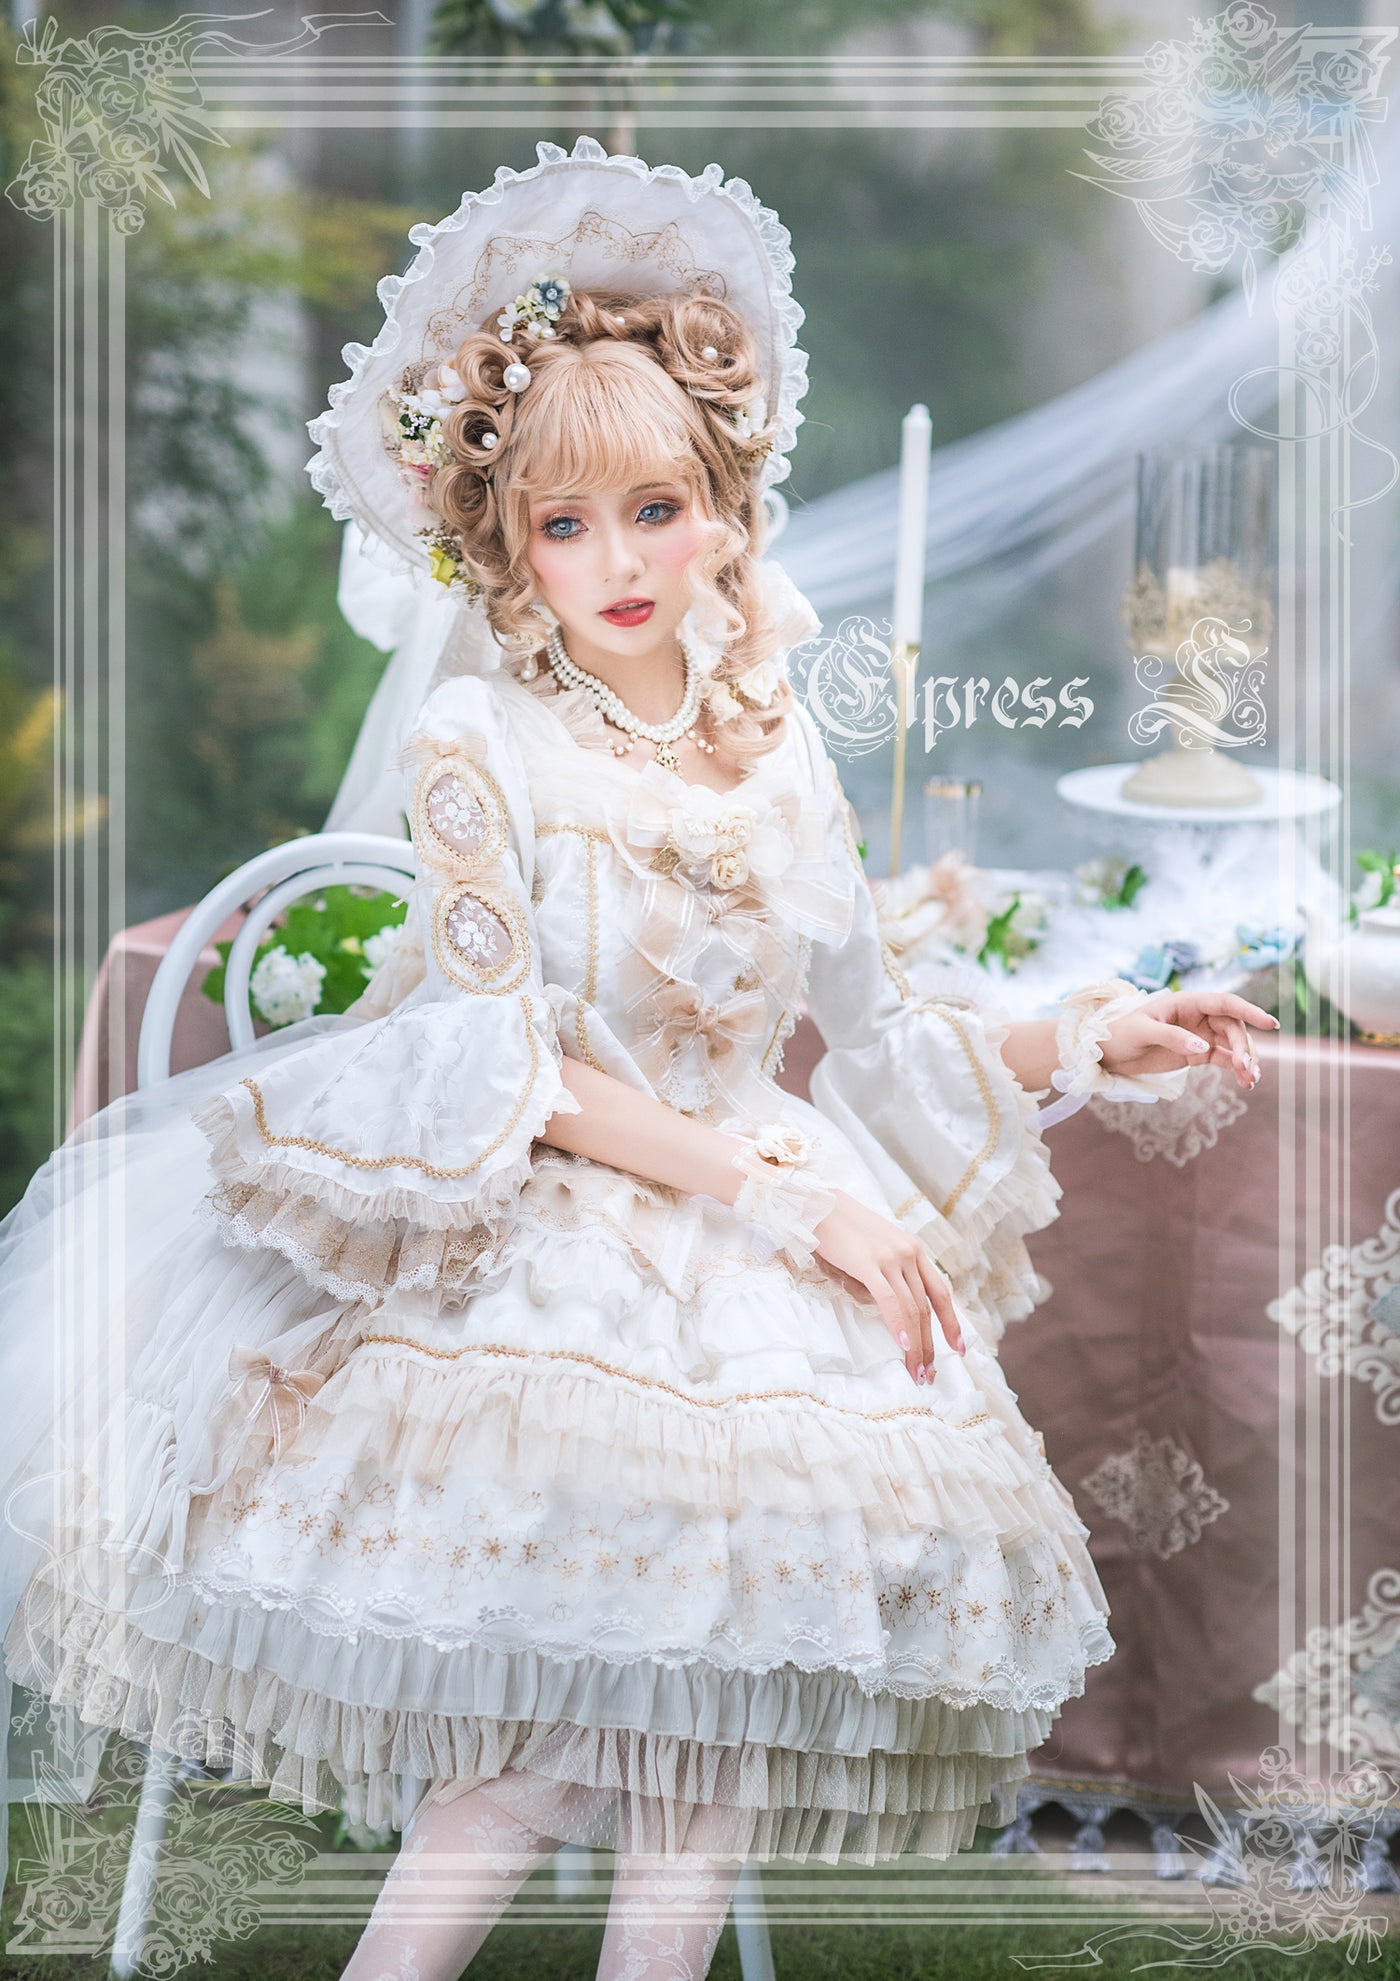 Elpress L~Fairies Island~Lolita wedding Dress OP Dress white gold S 